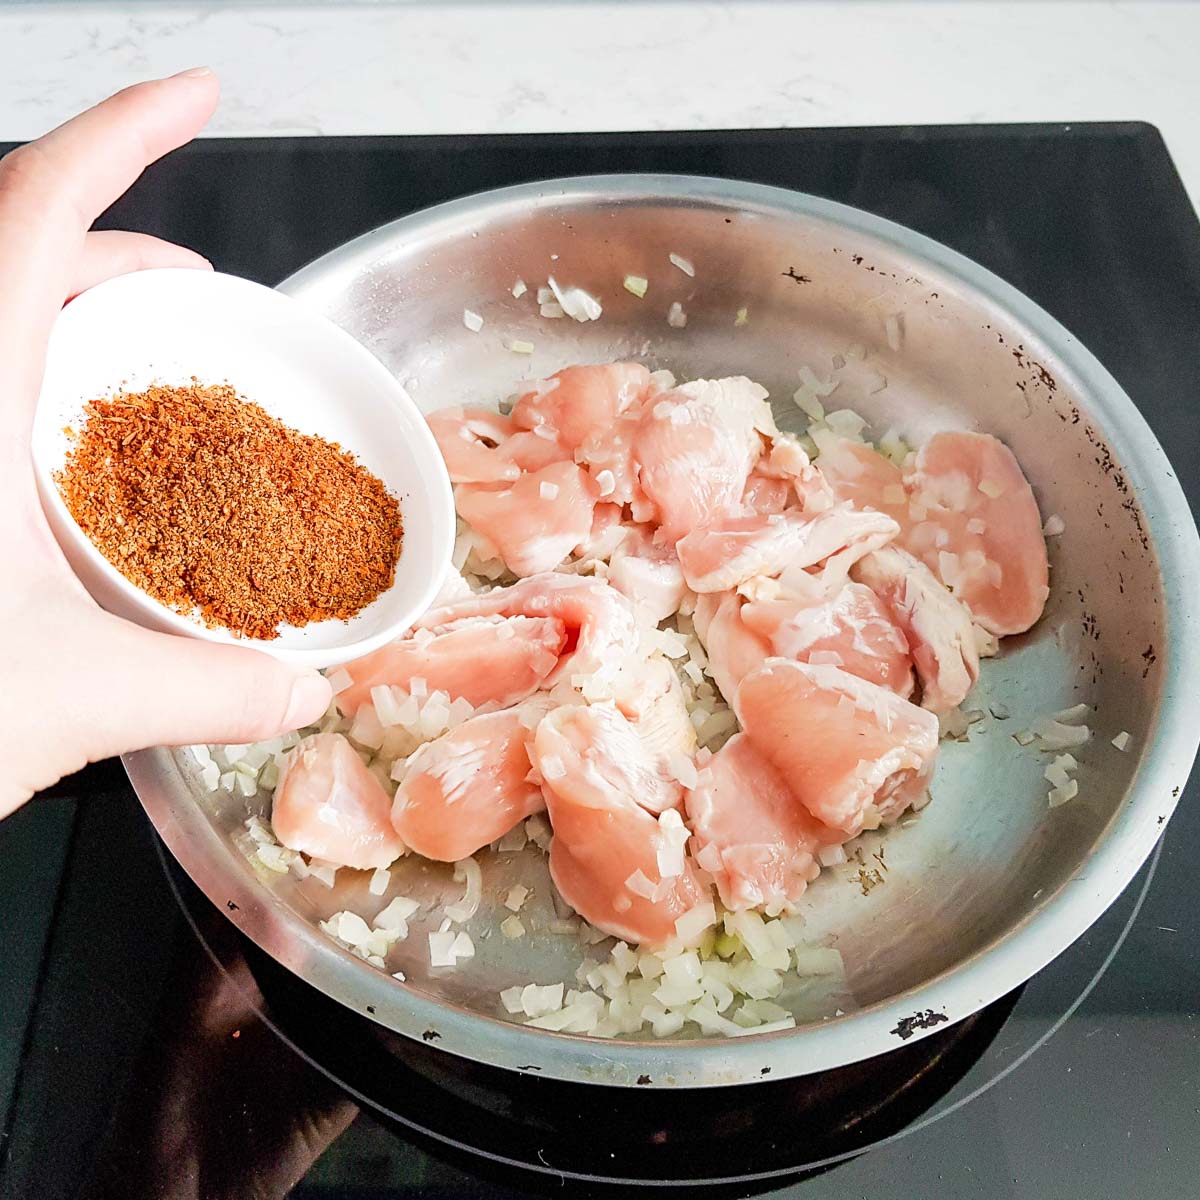 Adding Cajun seasoning to diced chicken in a pan.